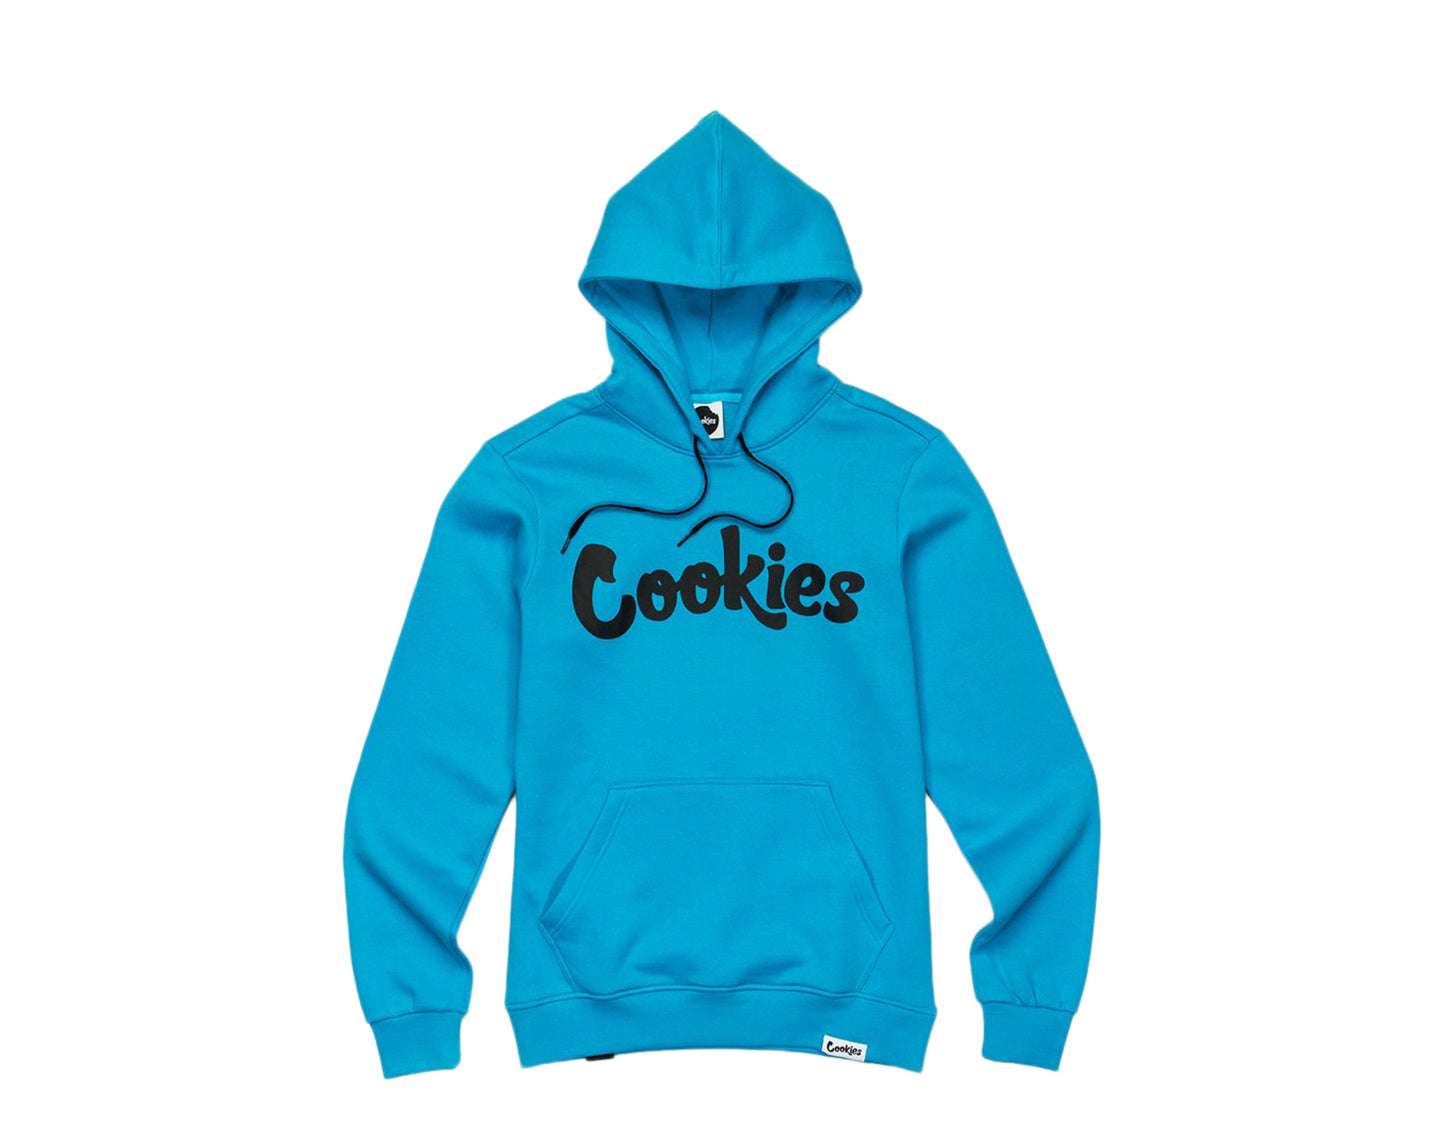 Cookies Original Logo Thin Mint Fleece Blue/Black Men's Hoodie 1536H3320-CBB